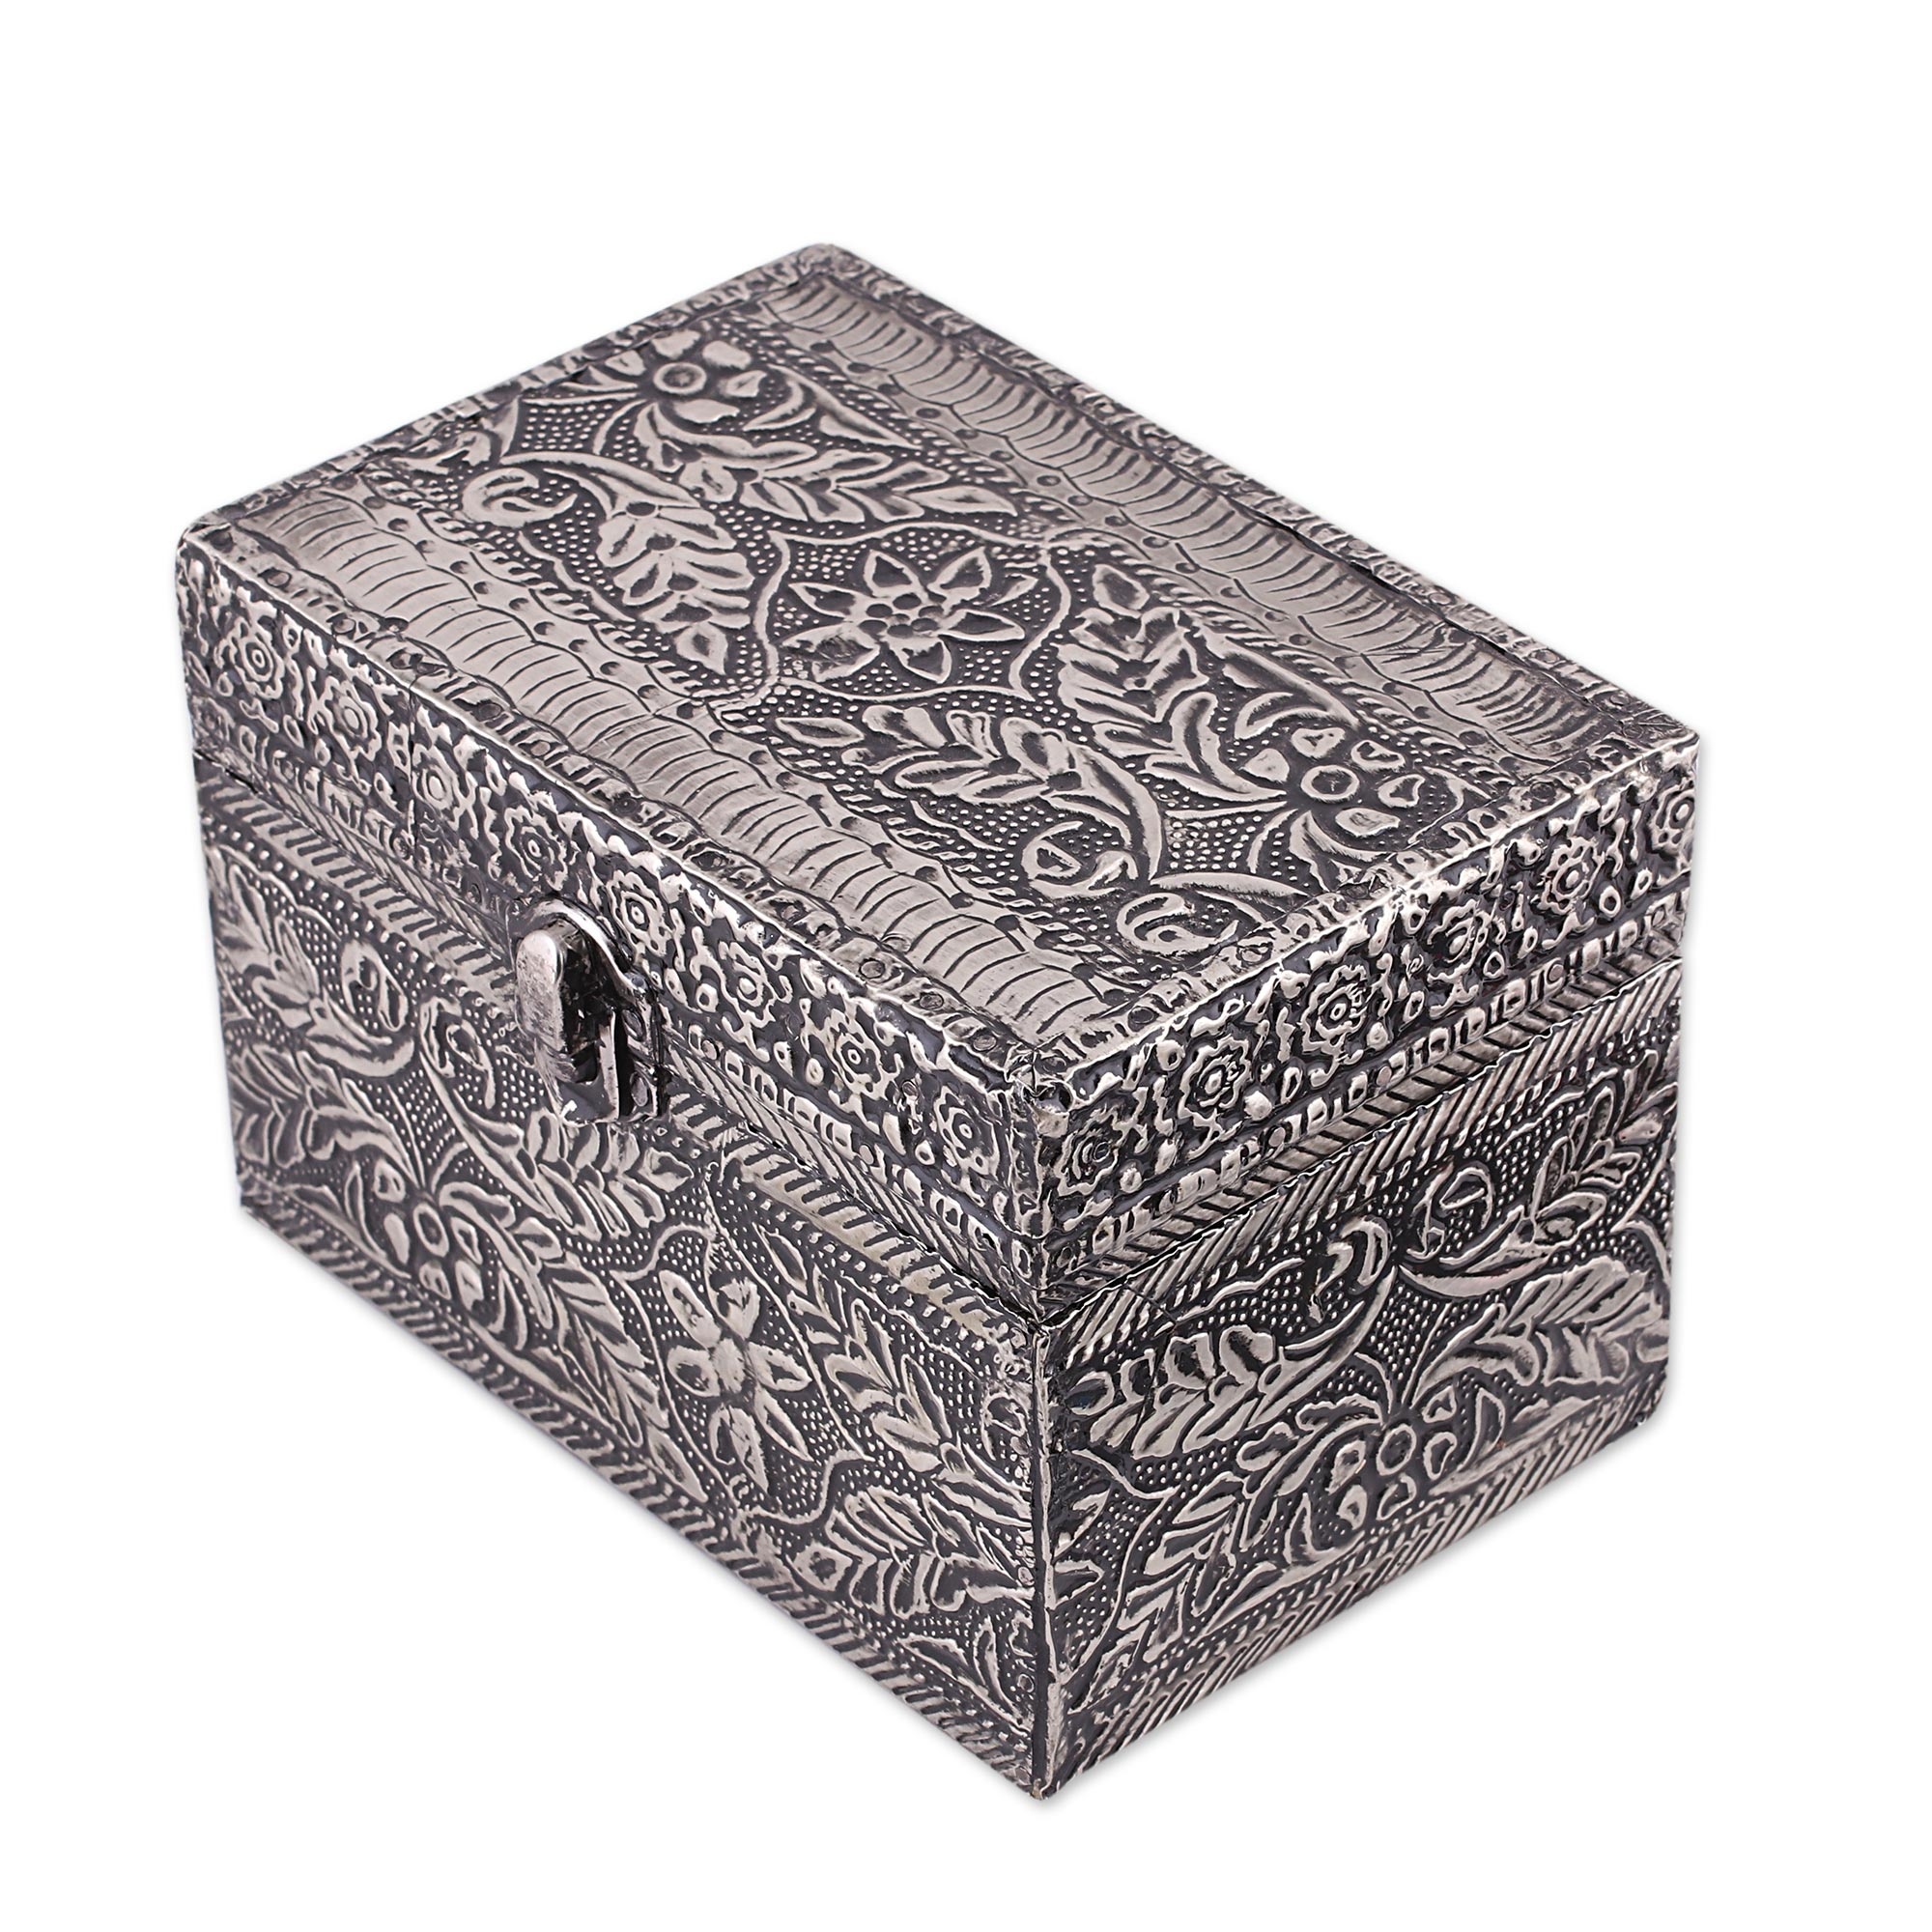 Brass Jewelry Box from India - Persian Paradise | NOVICA